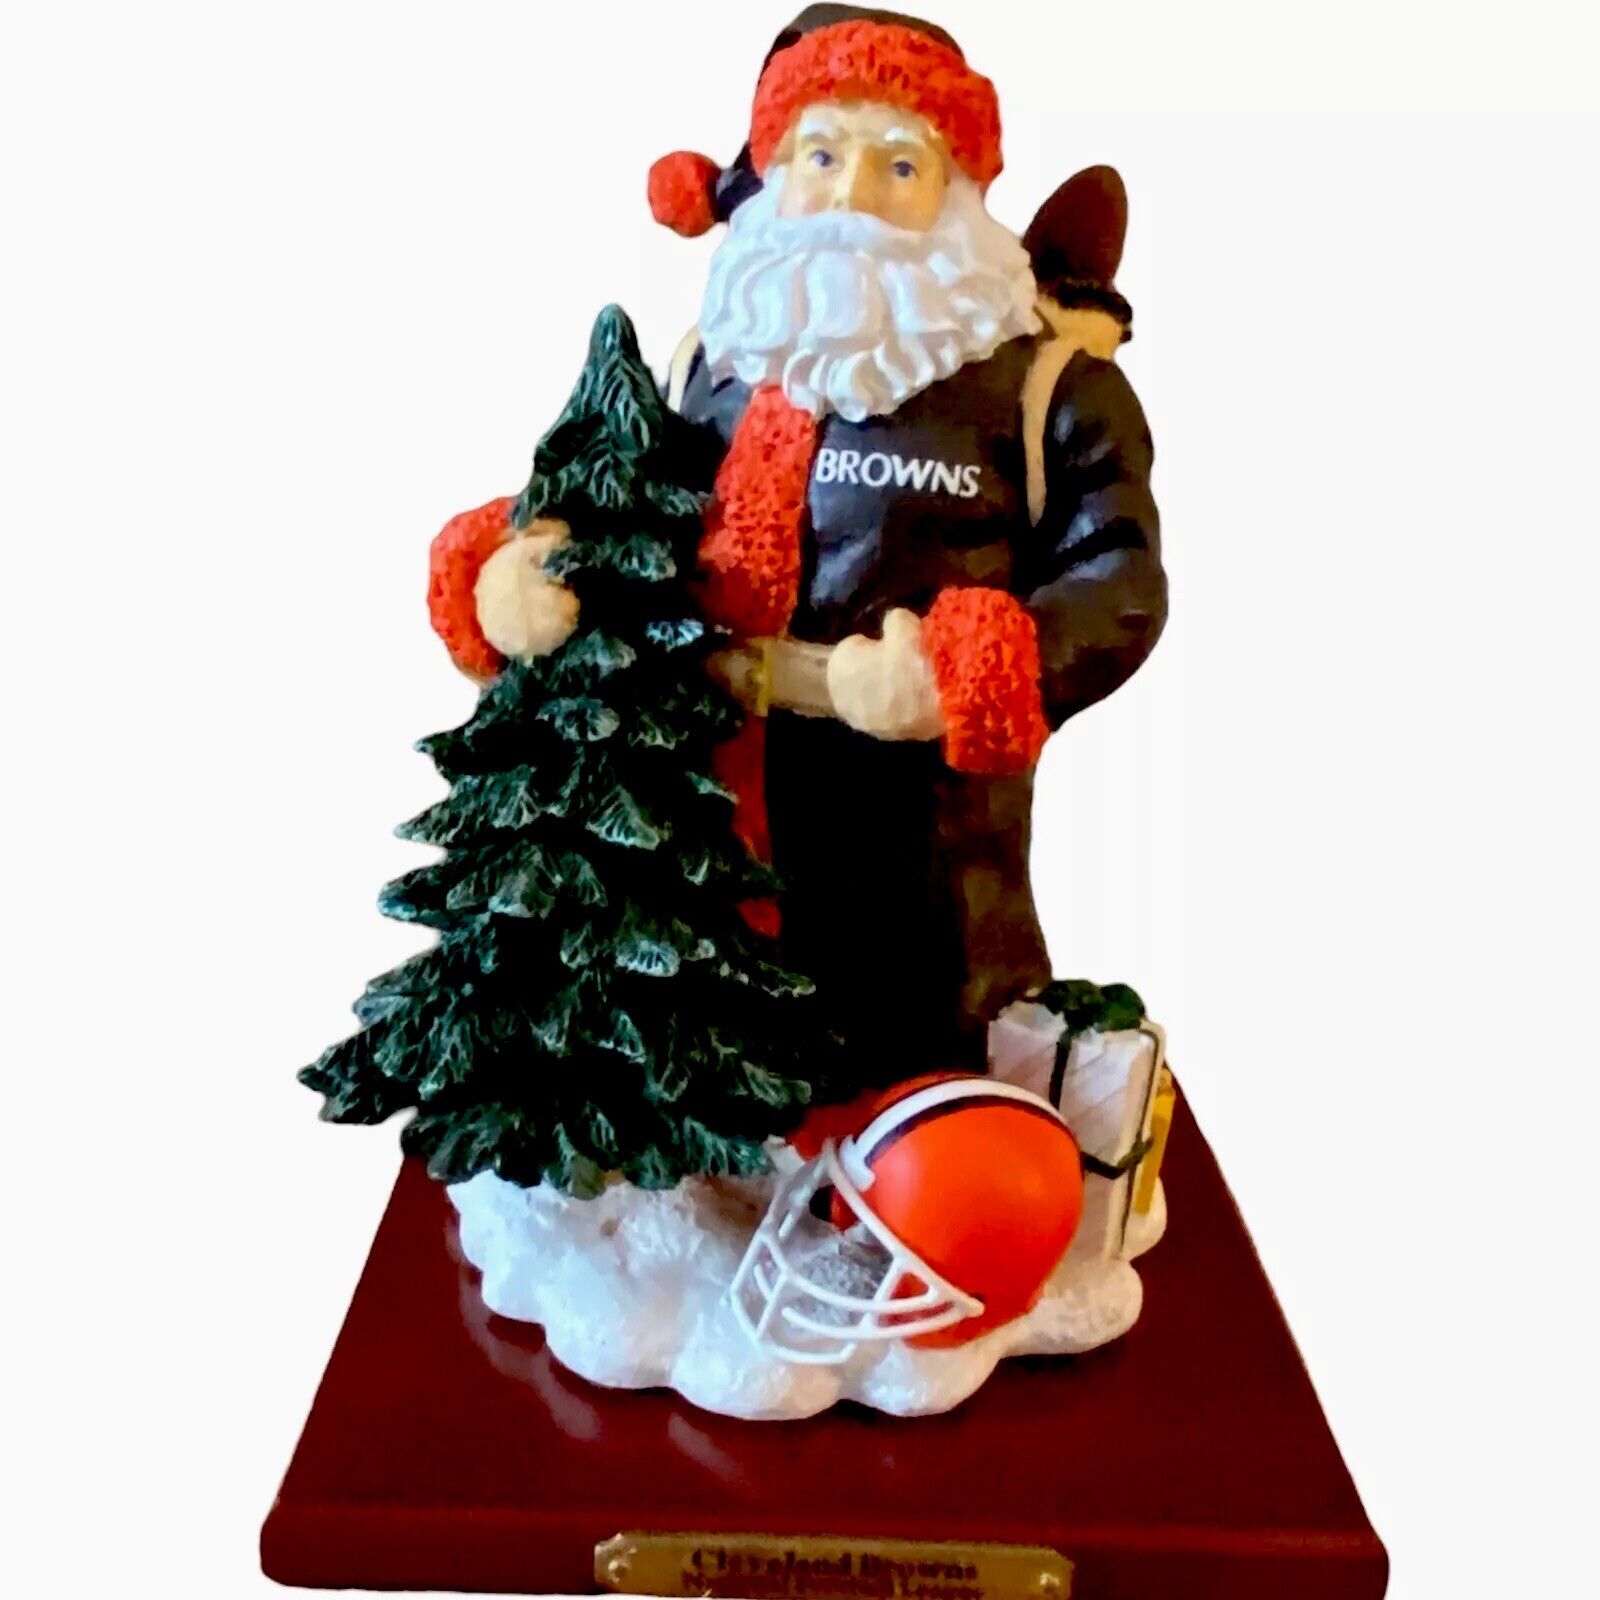 Cleveland Browns 8” Santa Figurine / Memory Company